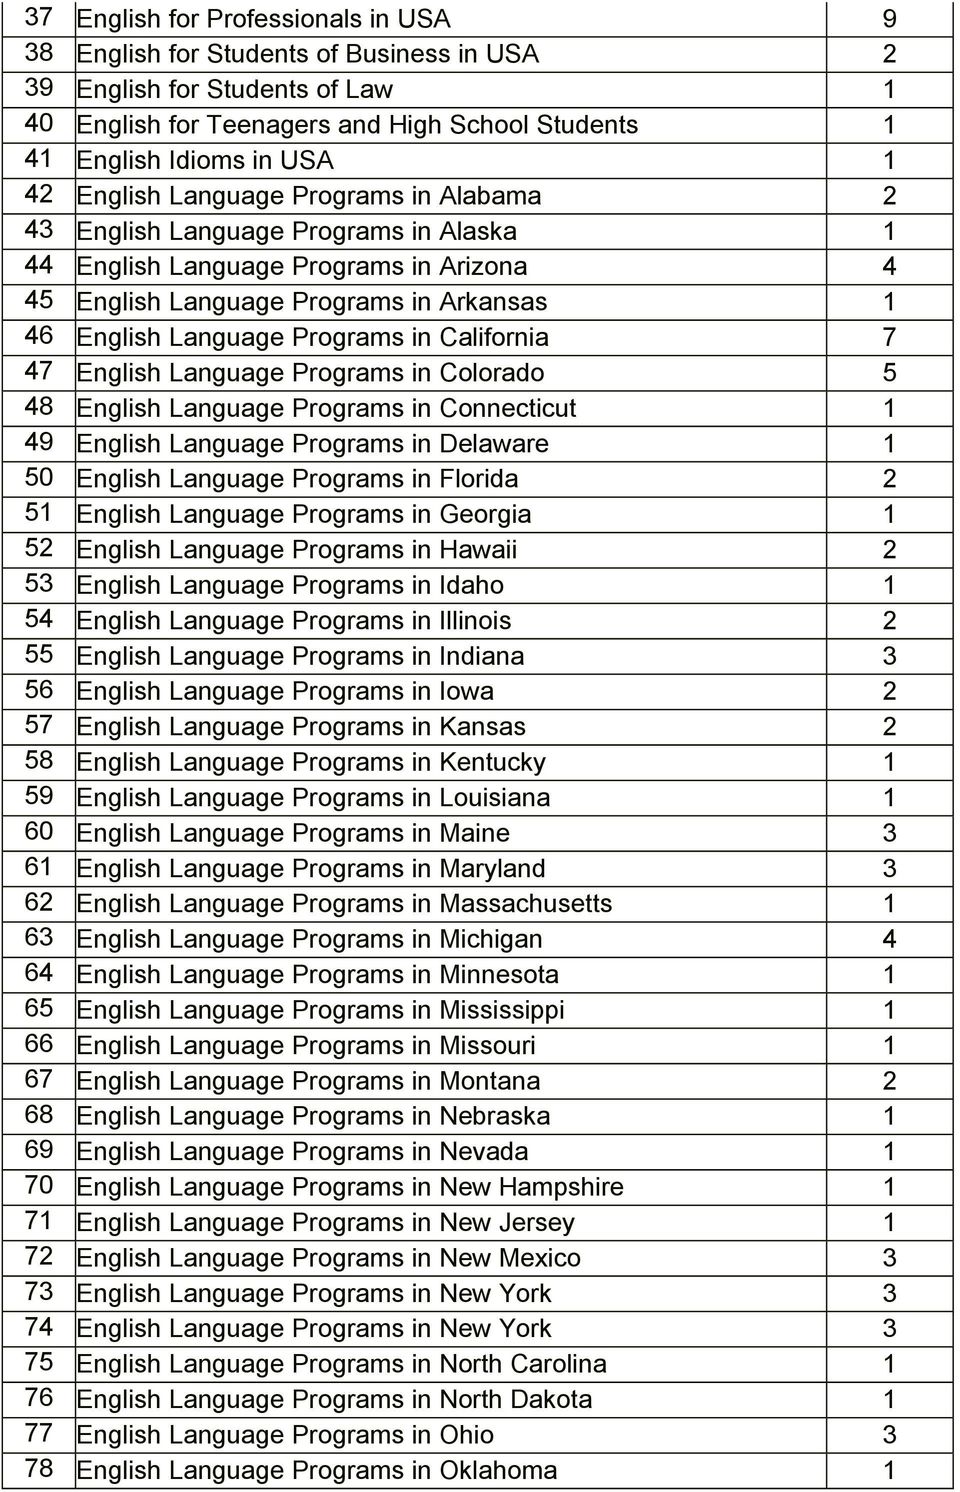 California 7 47 English Language Programs in Colorado 5 48 English Language Programs in Connecticut 1 49 English Language Programs in Delaware 1 50 English Language Programs in Florida 2 51 English